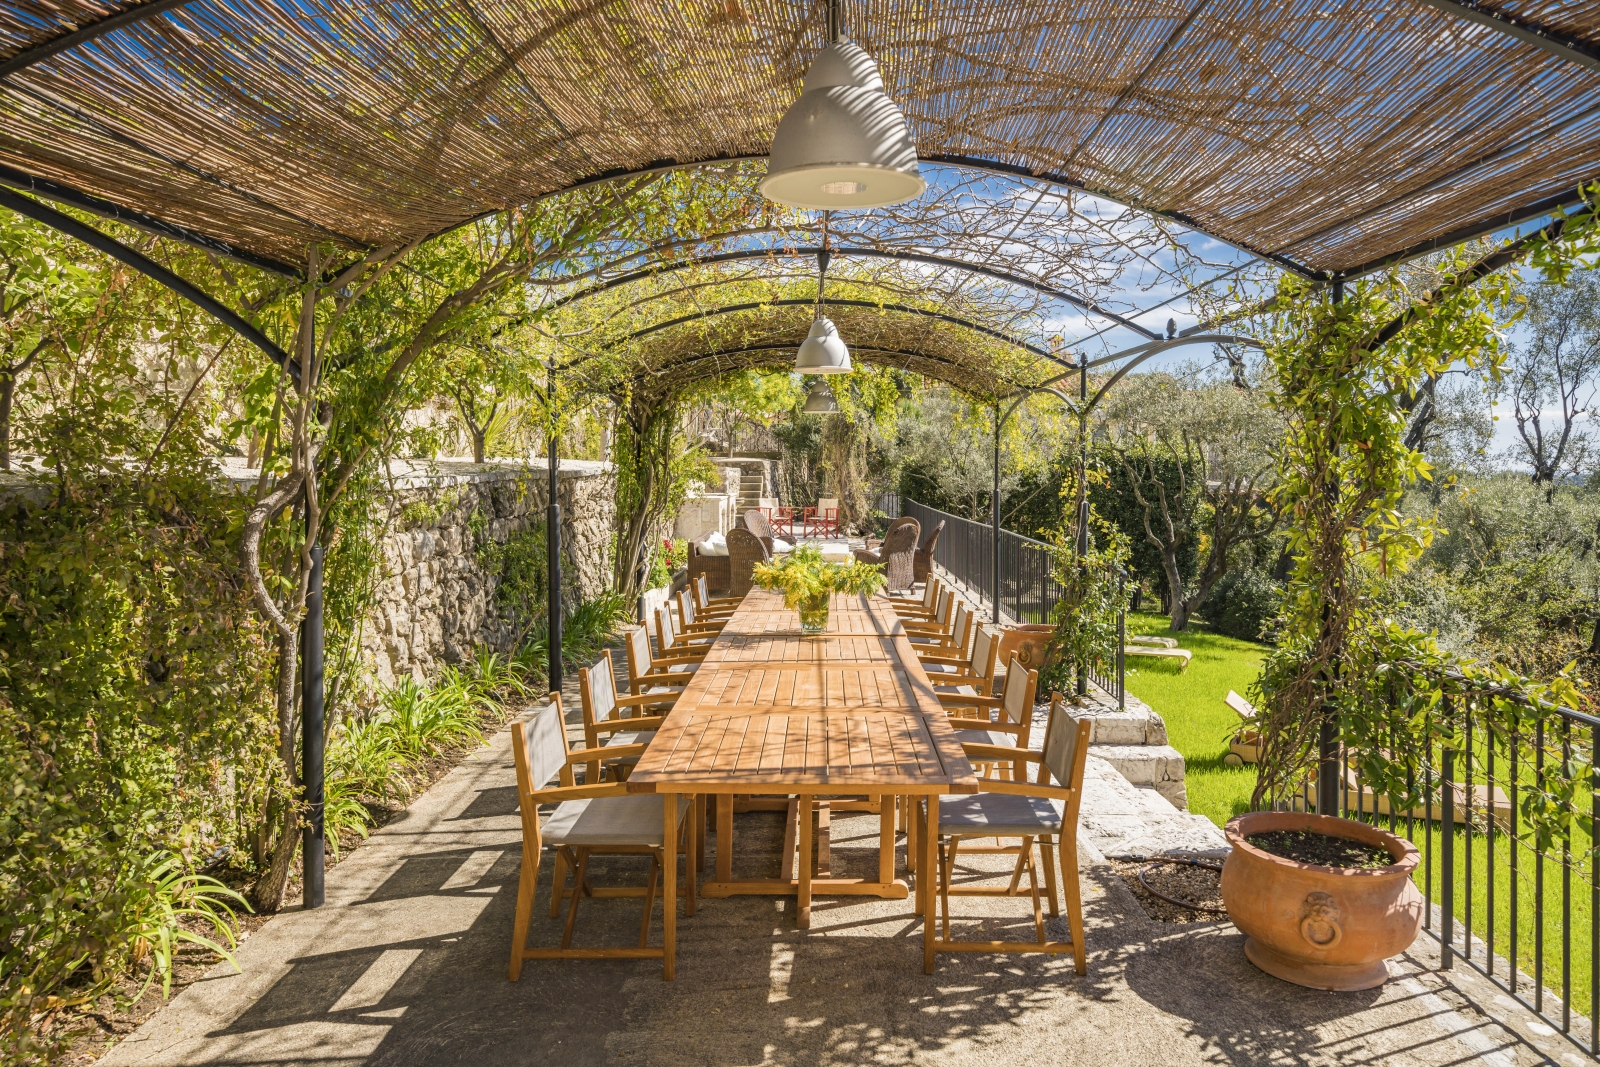 Extensive outdoor dining table on the terrace of Villa Malvan, overlooking the lush gardens